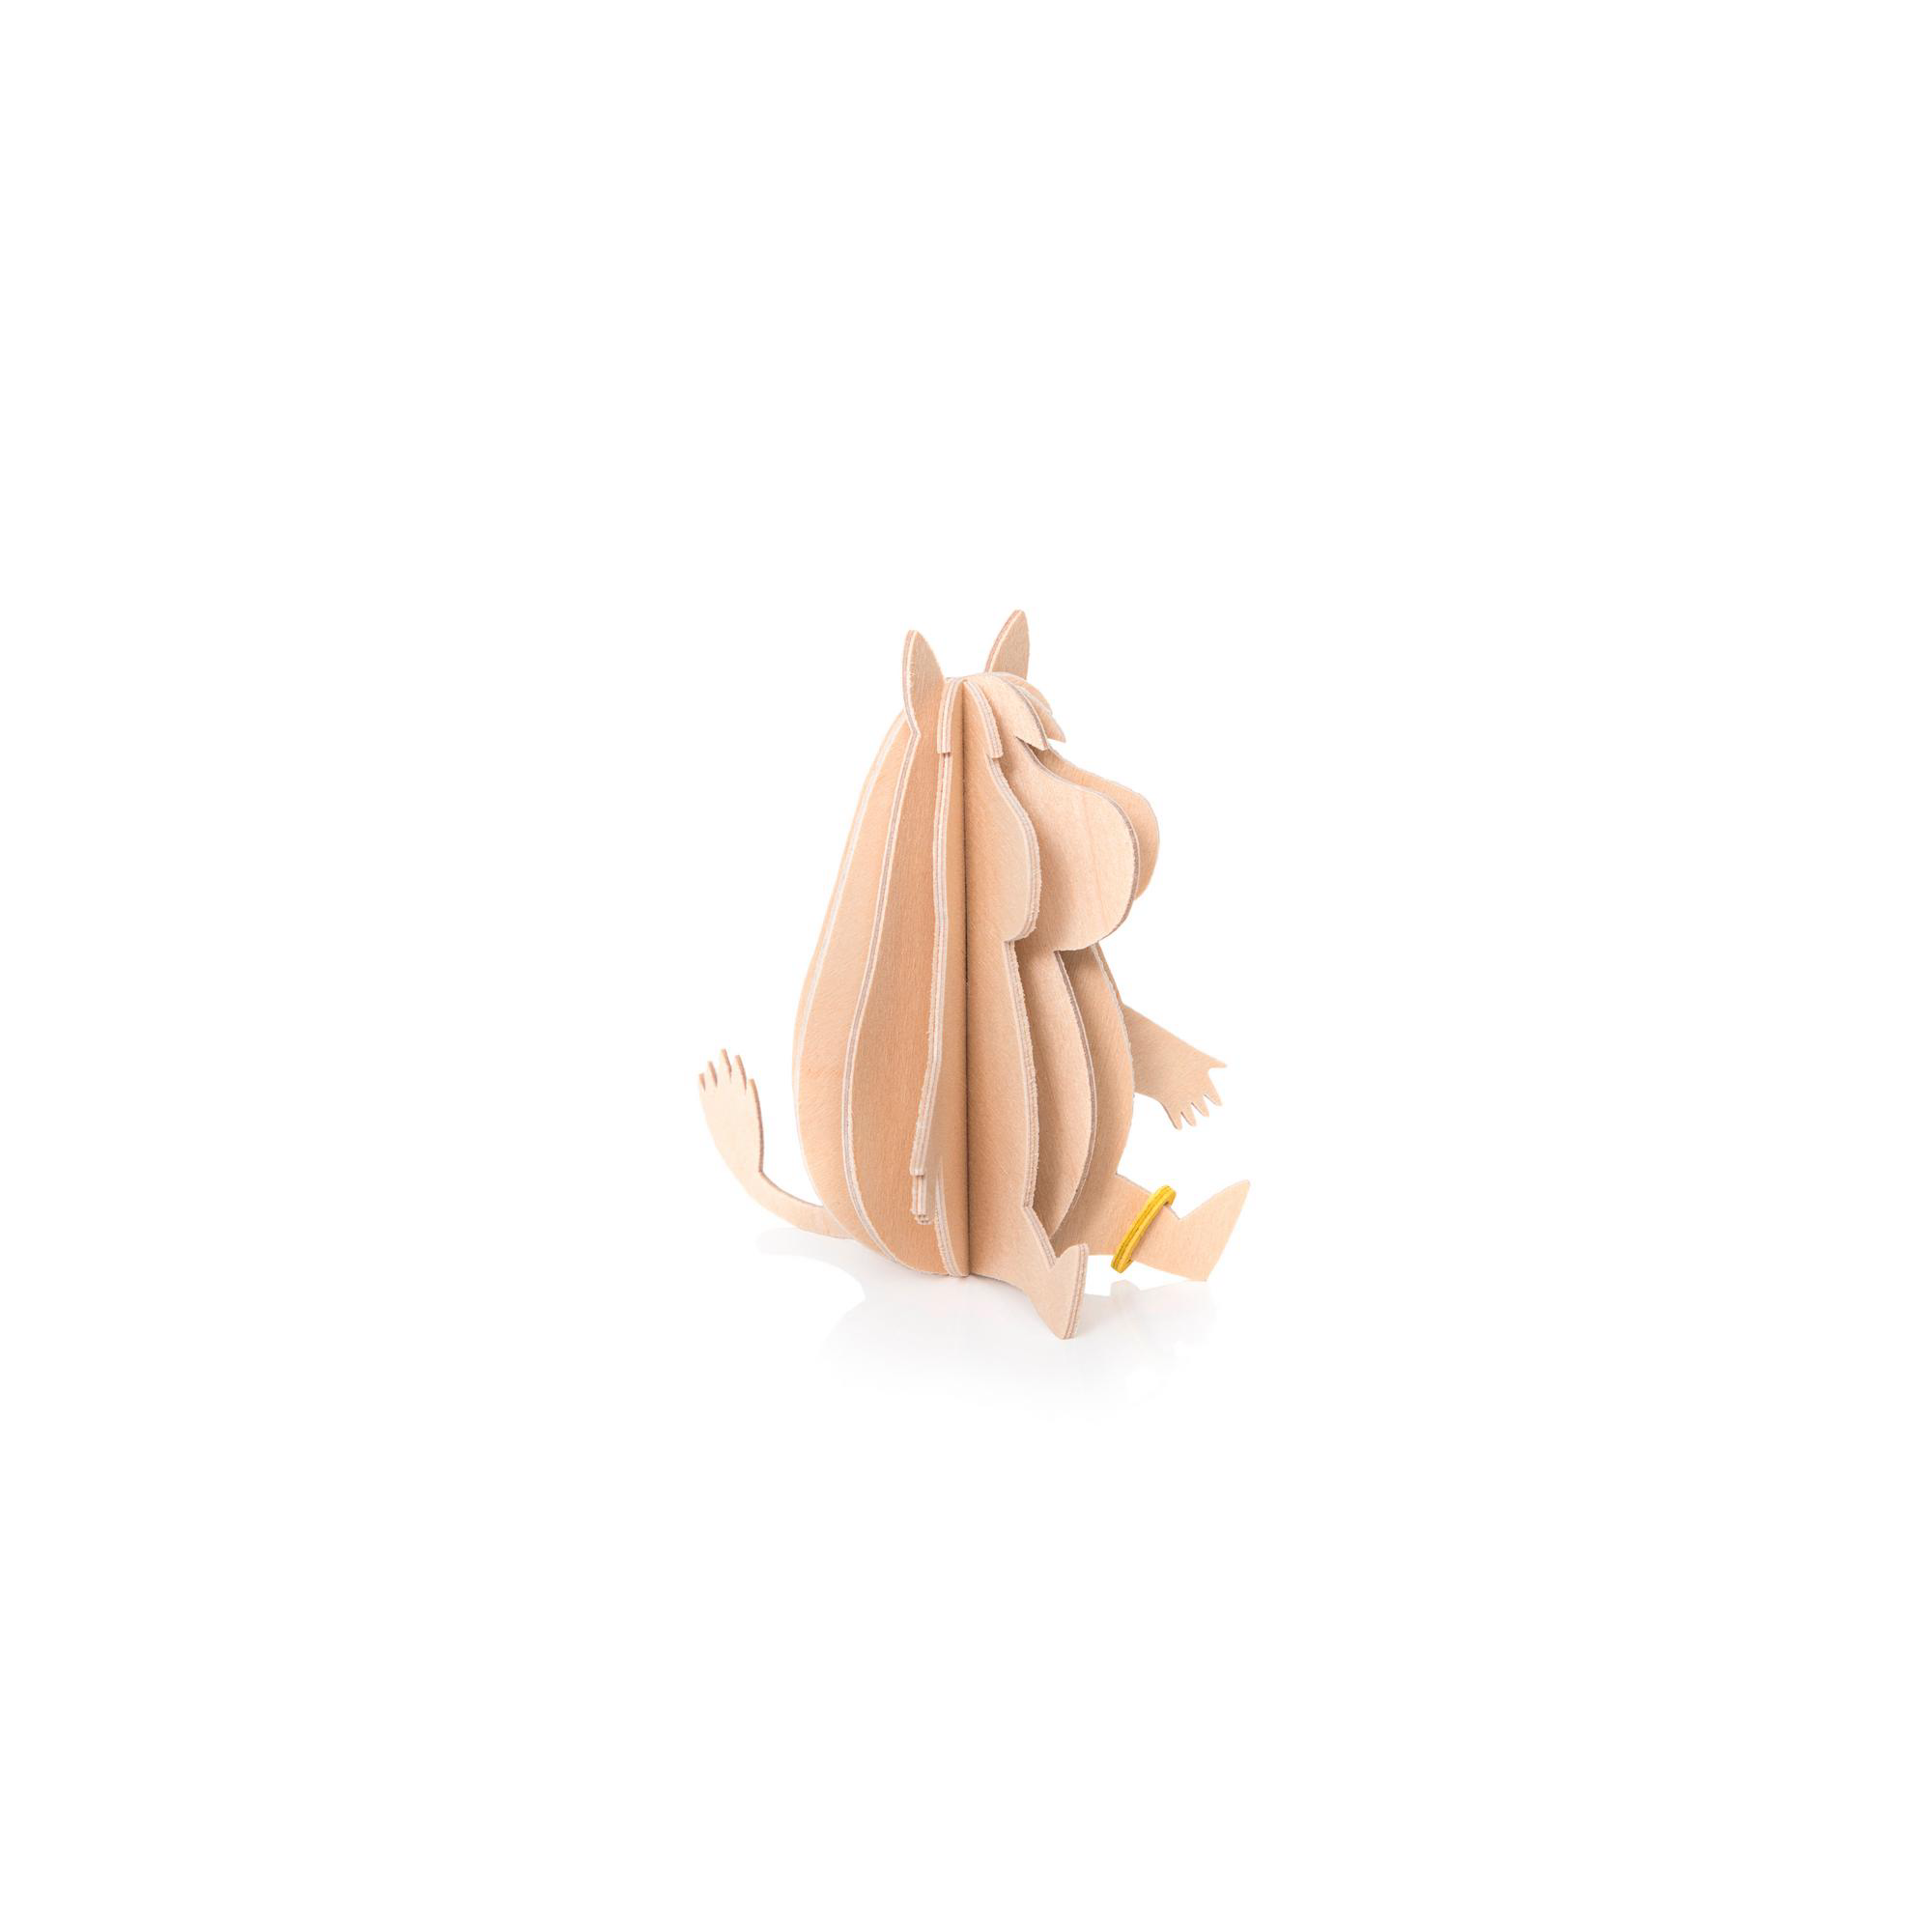 63. Moomin Snorkmaiden * 3D puzzle card * LOVI - Lovi - Gifts